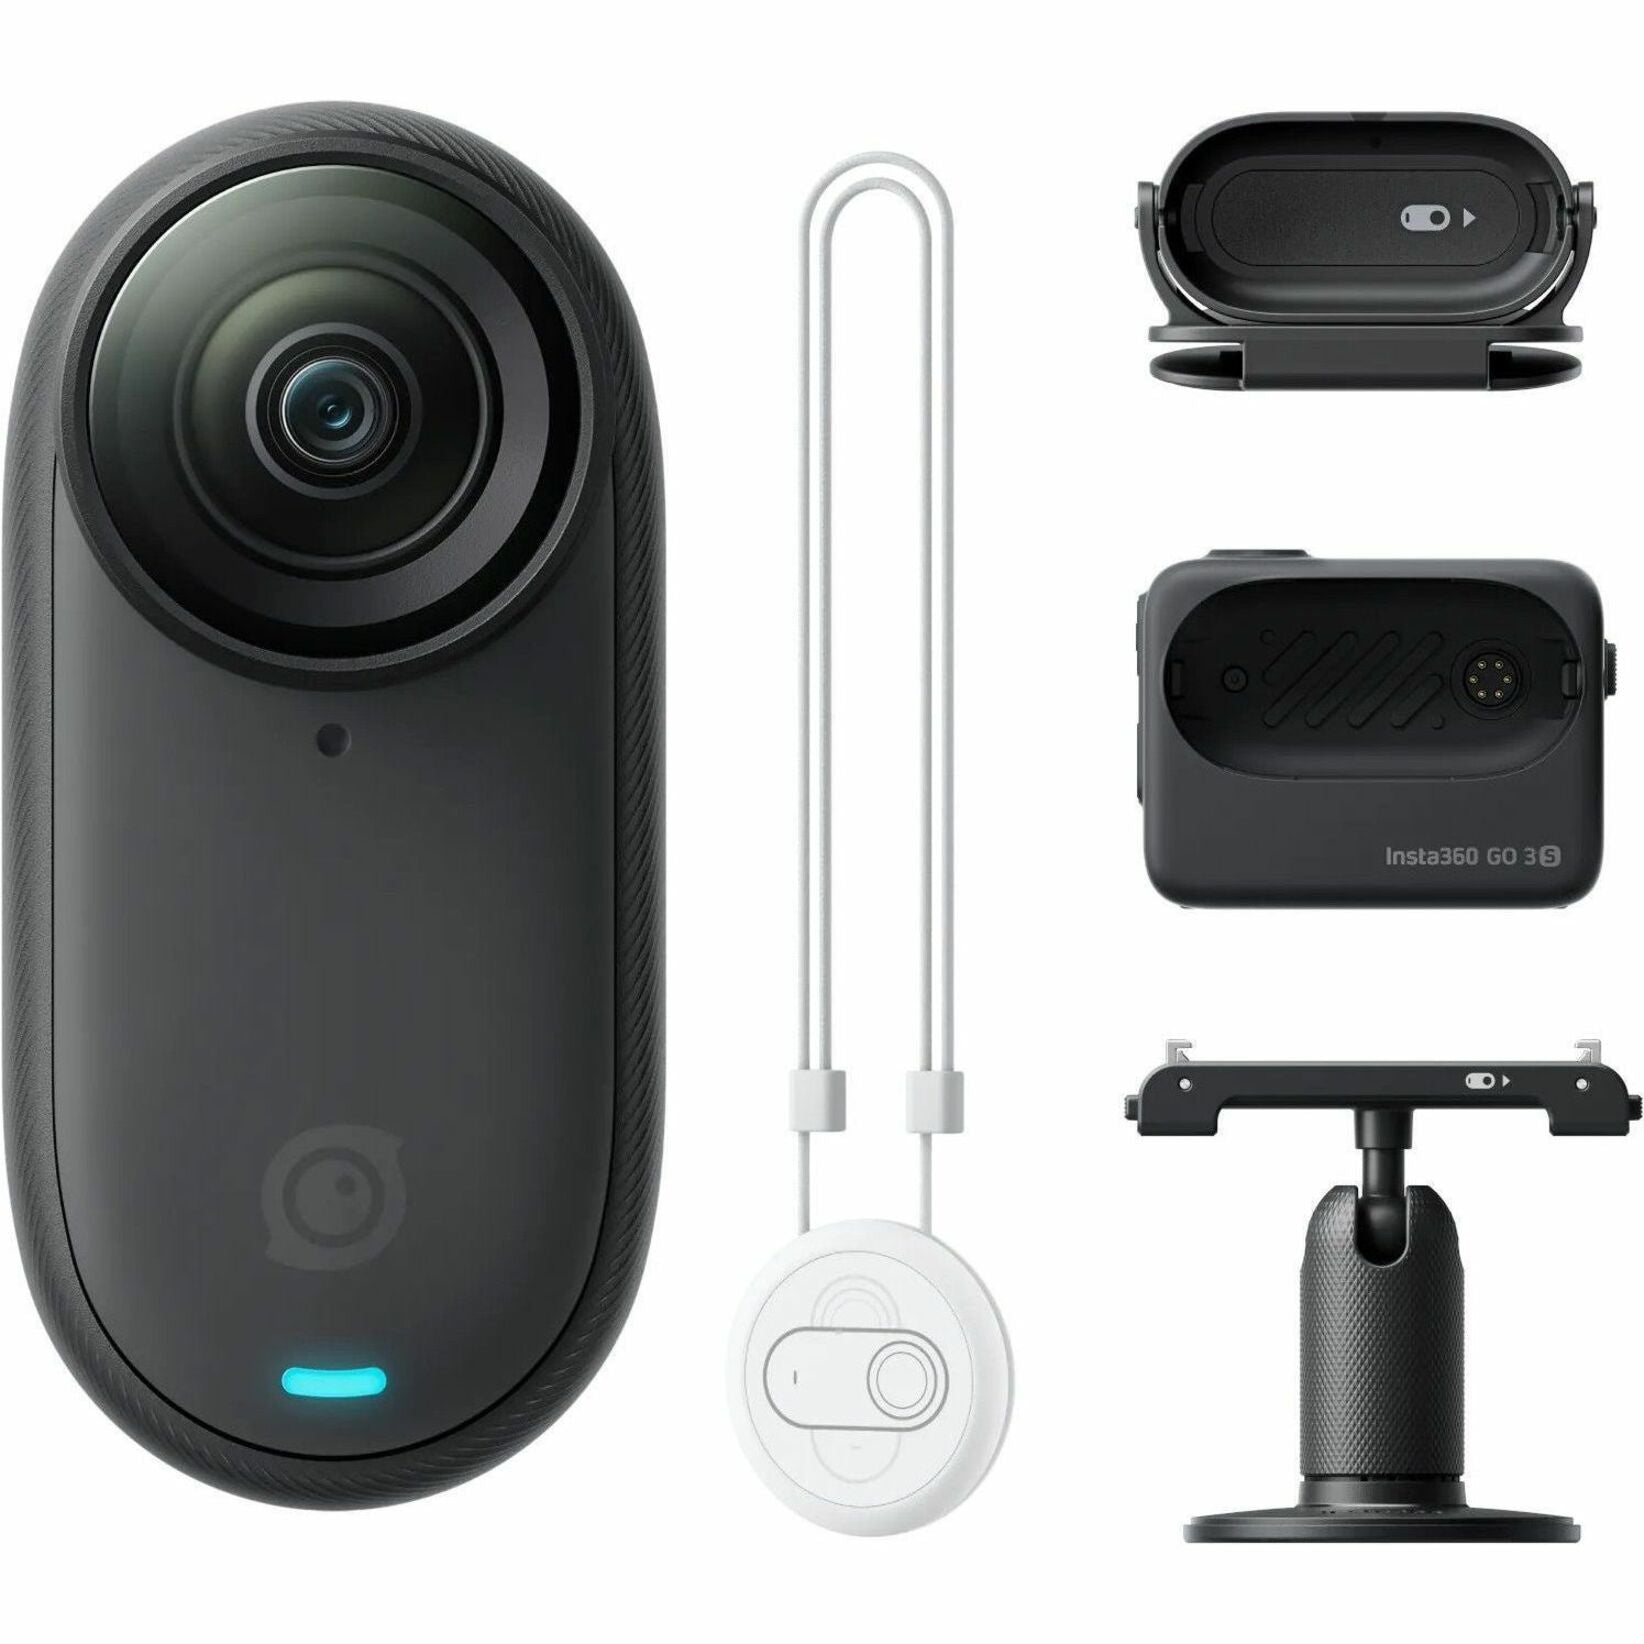 Insta360 3S Digital Camcorder - 2.2" Touchscreen - High Dynamic Range (HDR) - 4K - Midnight Black (CINSAATA_GO3S13)